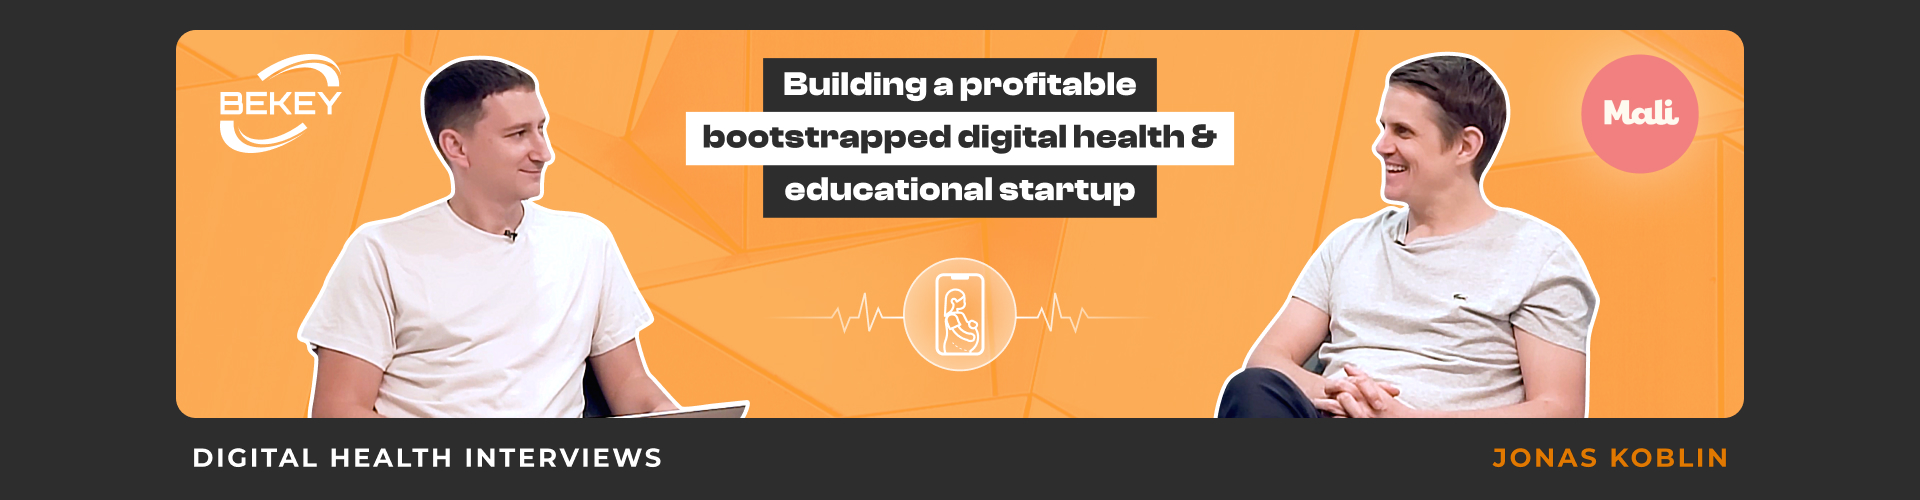 Building a Profitable Bootstrapped Digital Health & Educational Startup. Digital Health Interviews: Jonas Koblin - image